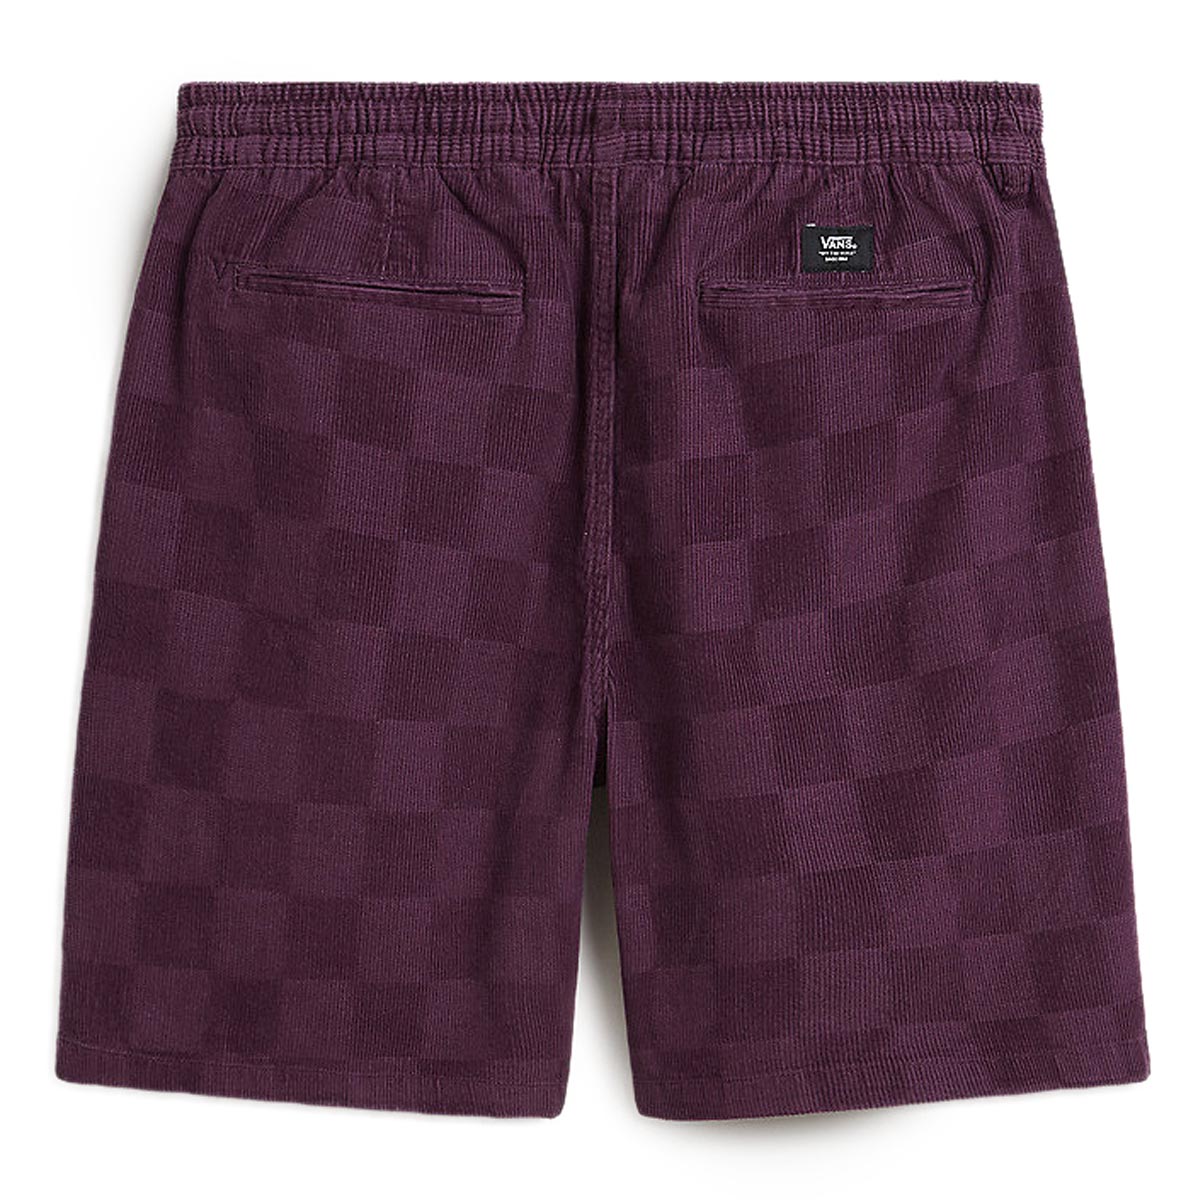 Vans Range Checkerboard Cord Loose Shorts - Blackberry Wine image 4